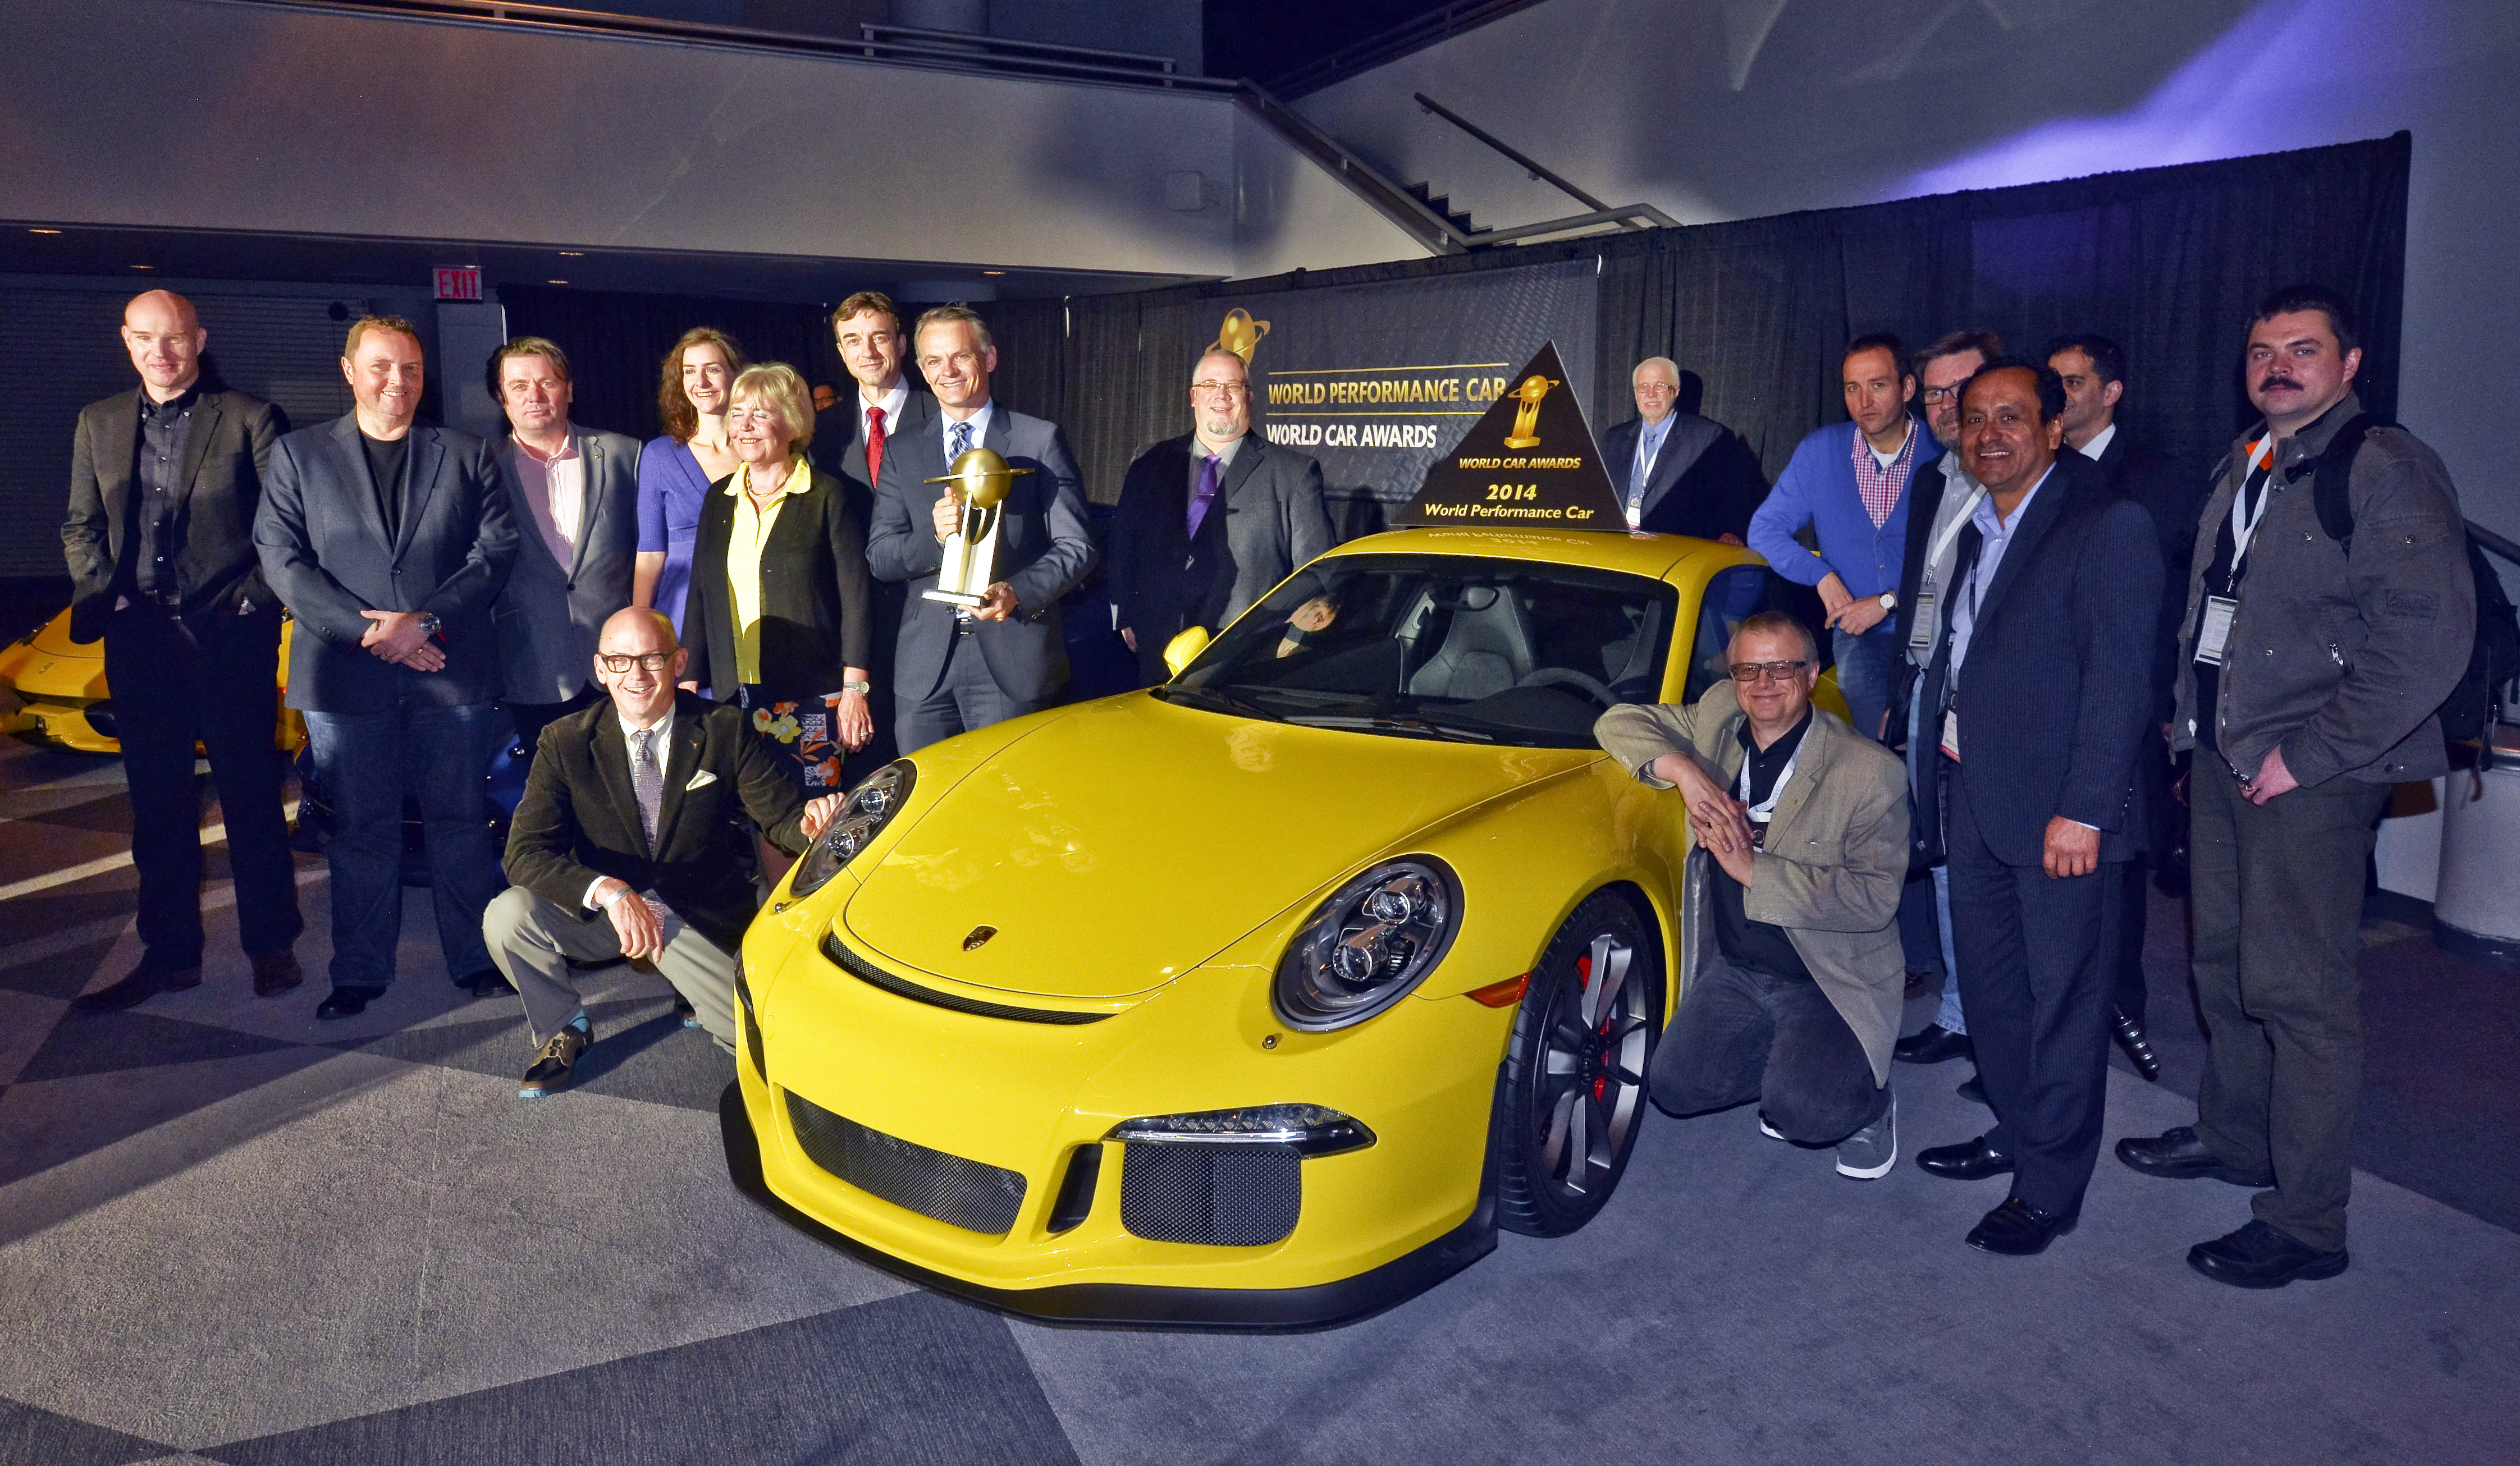 World performance. Агентство car World. Рейнфорс автомобиль. Car Performance. World car of the year Porsche Award.